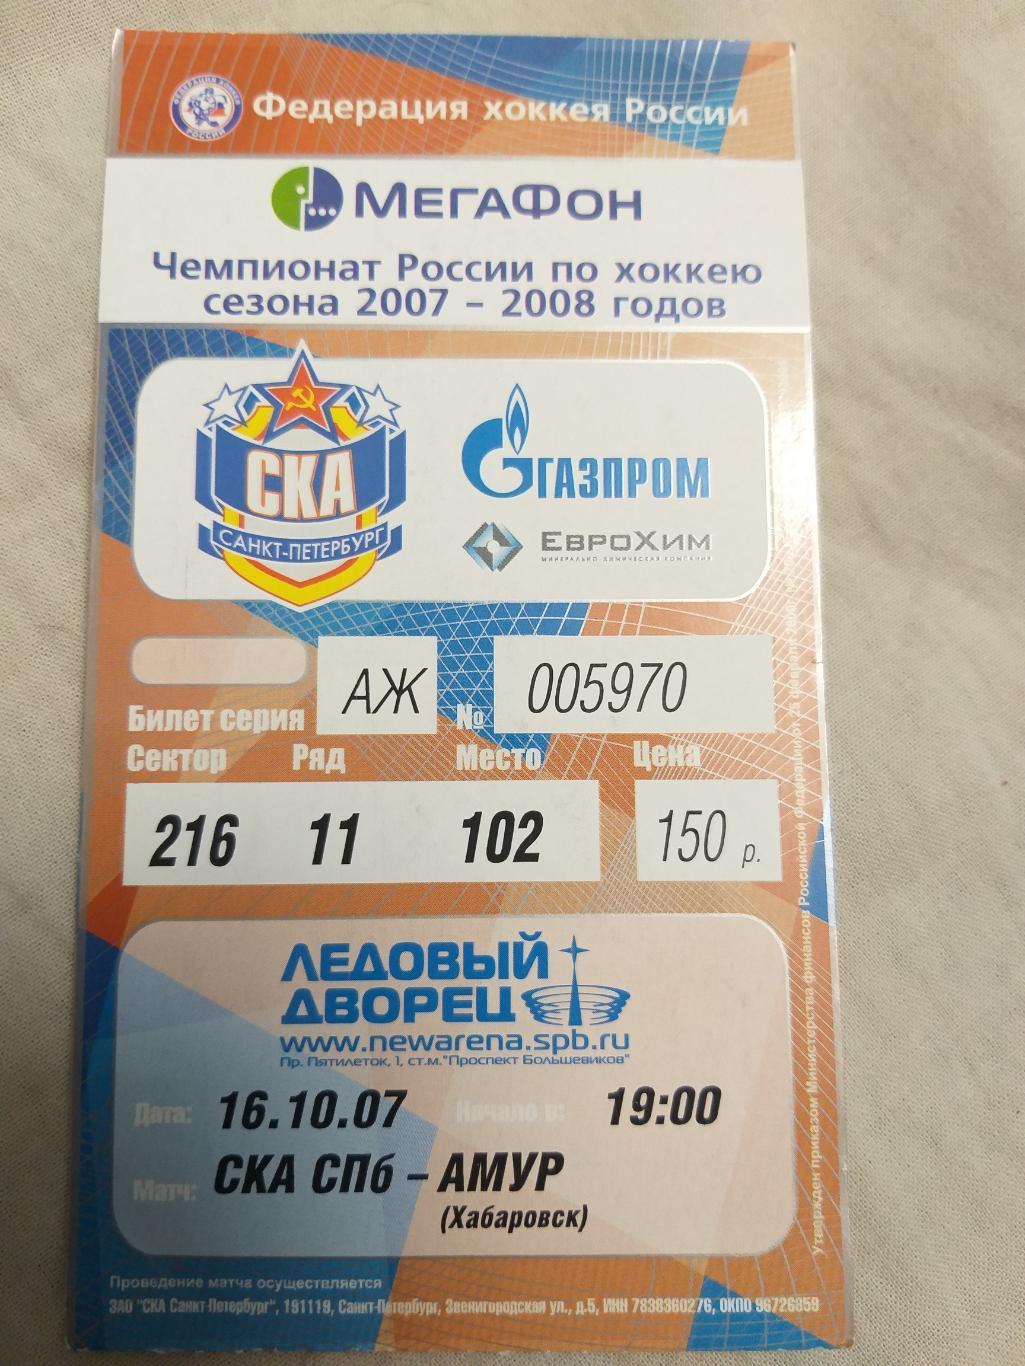 СКА(Санкт-Петербург)-Амур(Ха баровск) 16.10.2007 билет